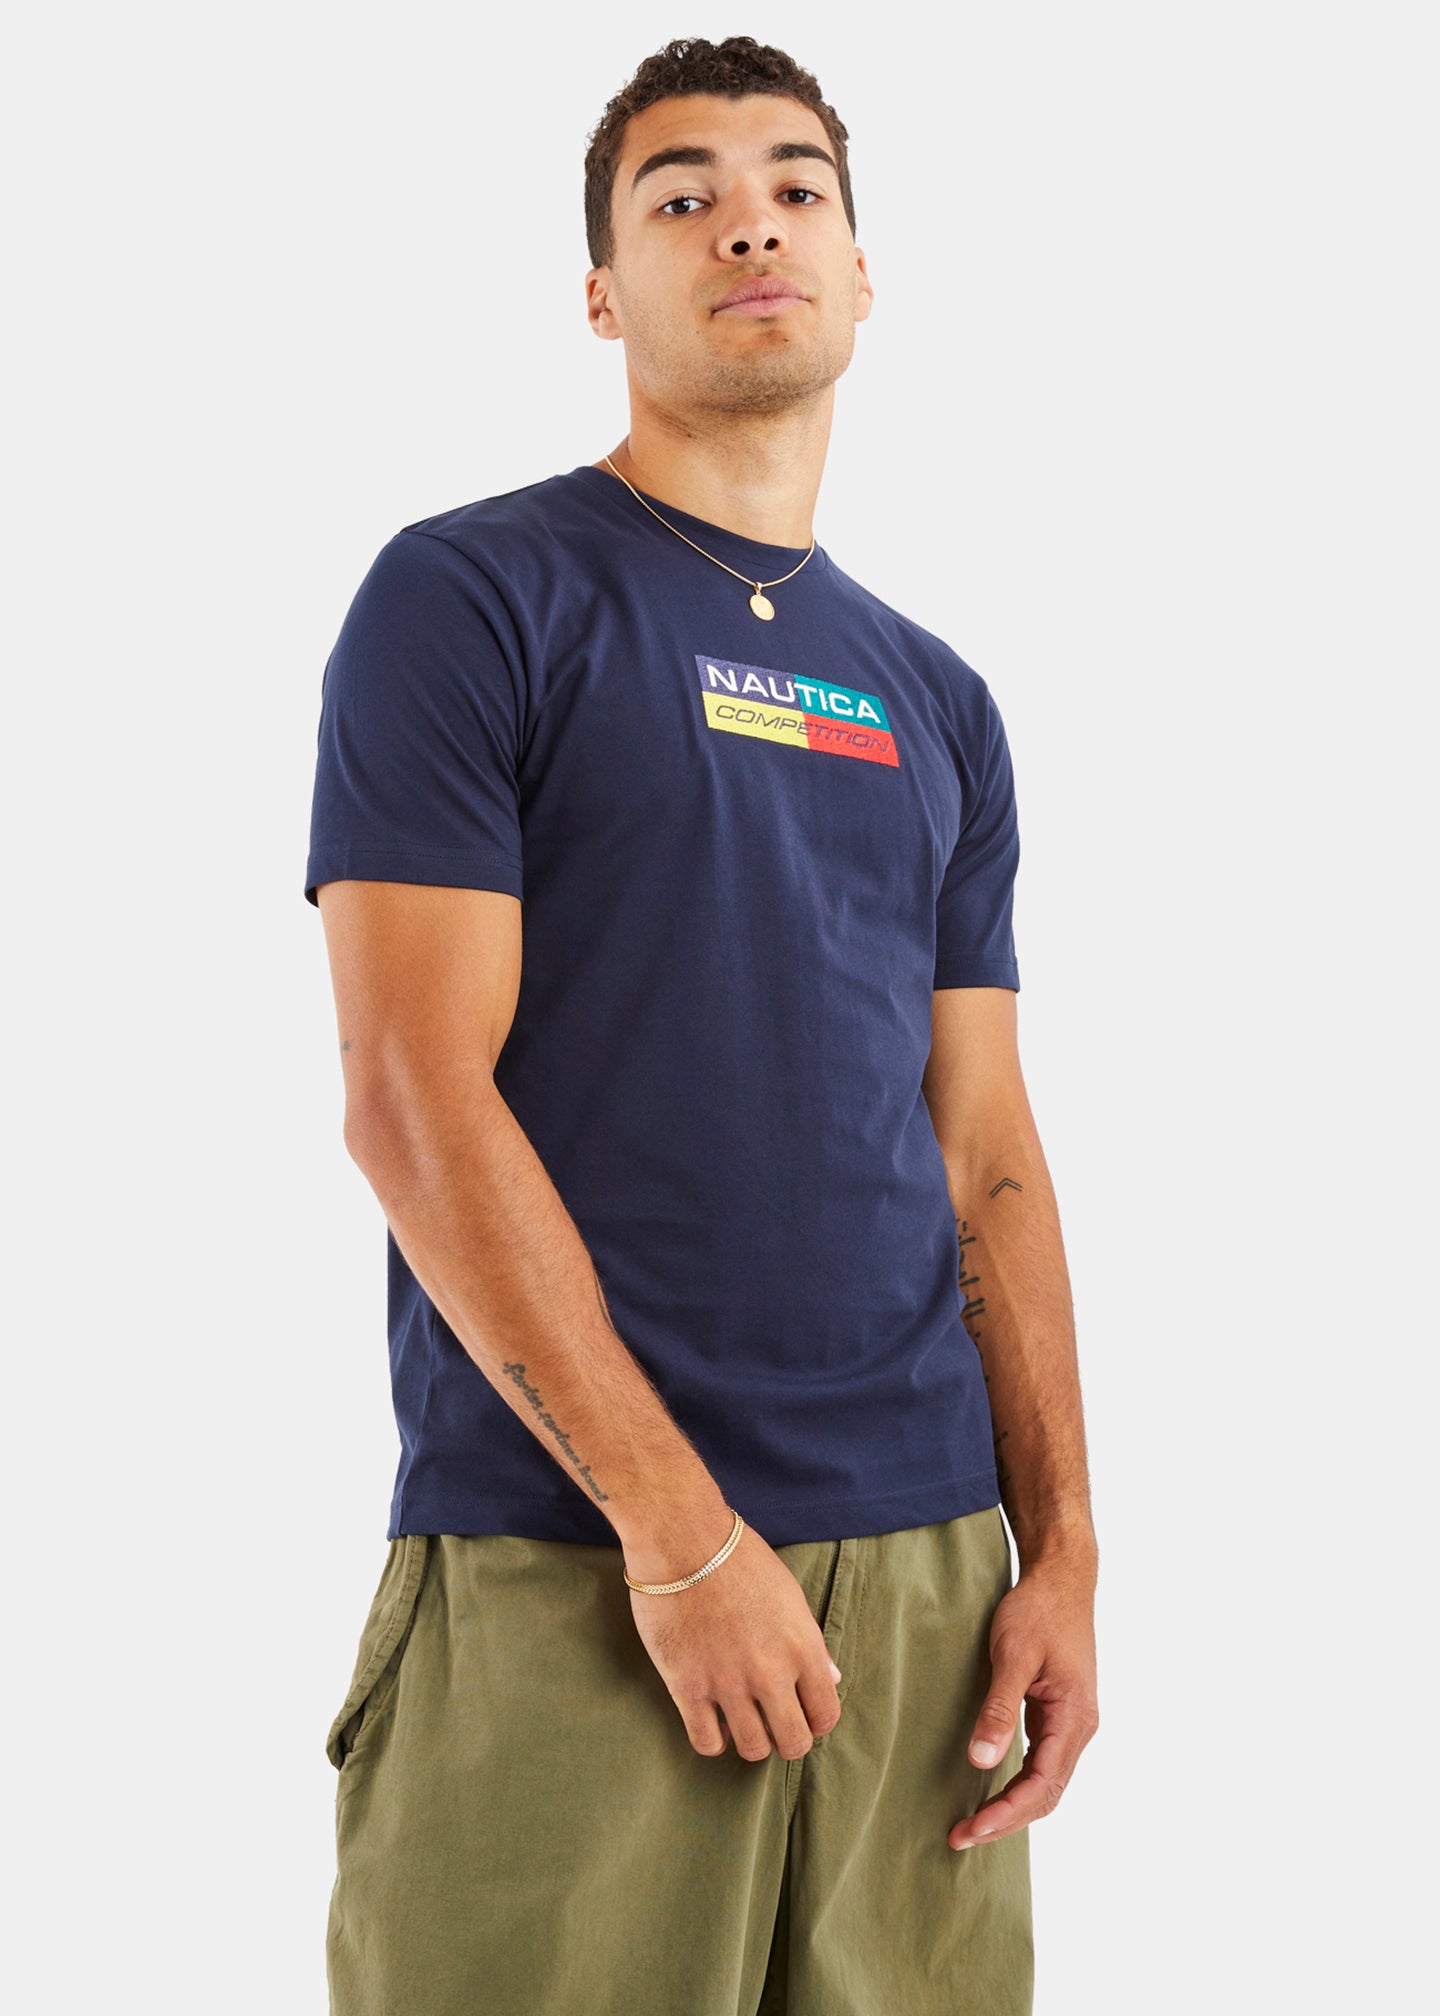 Nautica Competition Brac T-Shirt - Dark Navy - Front